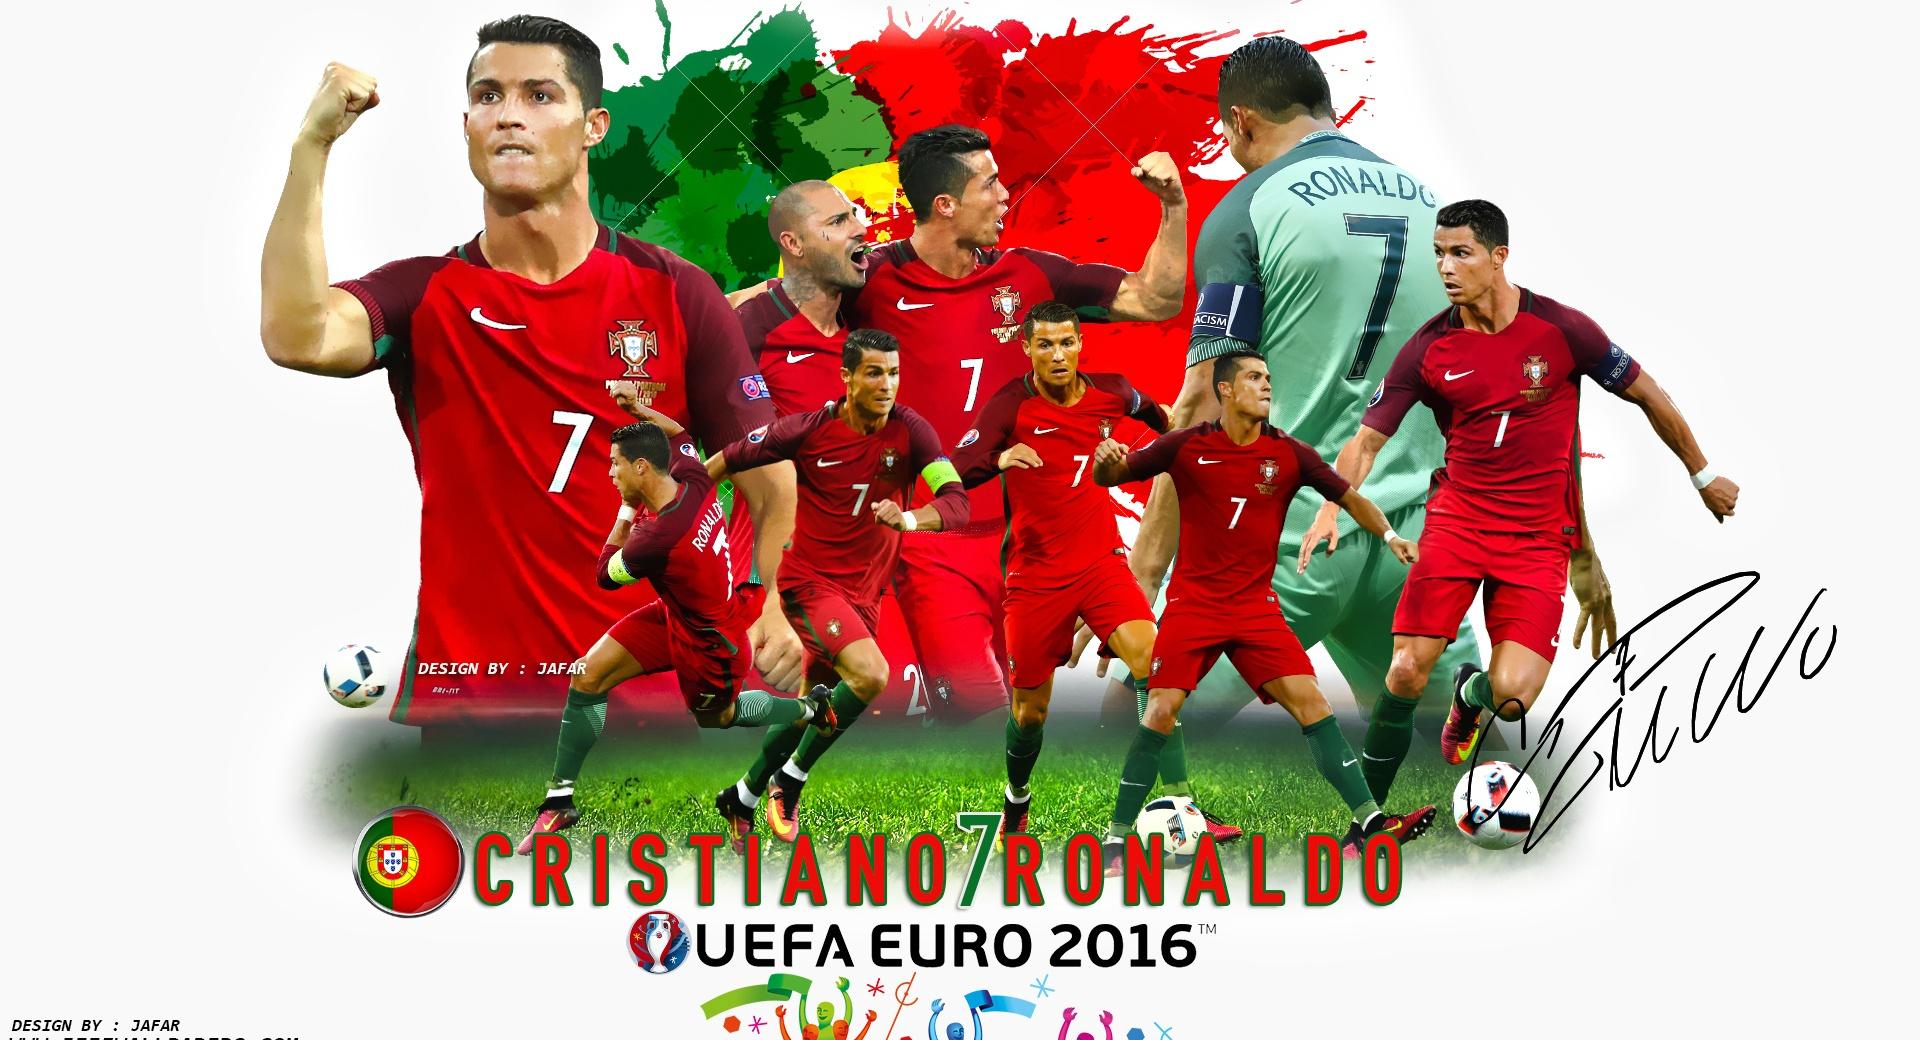 CRISTIANO RONALDO EURO 2016 at 2048 x 2048 iPad size wallpapers HD quality